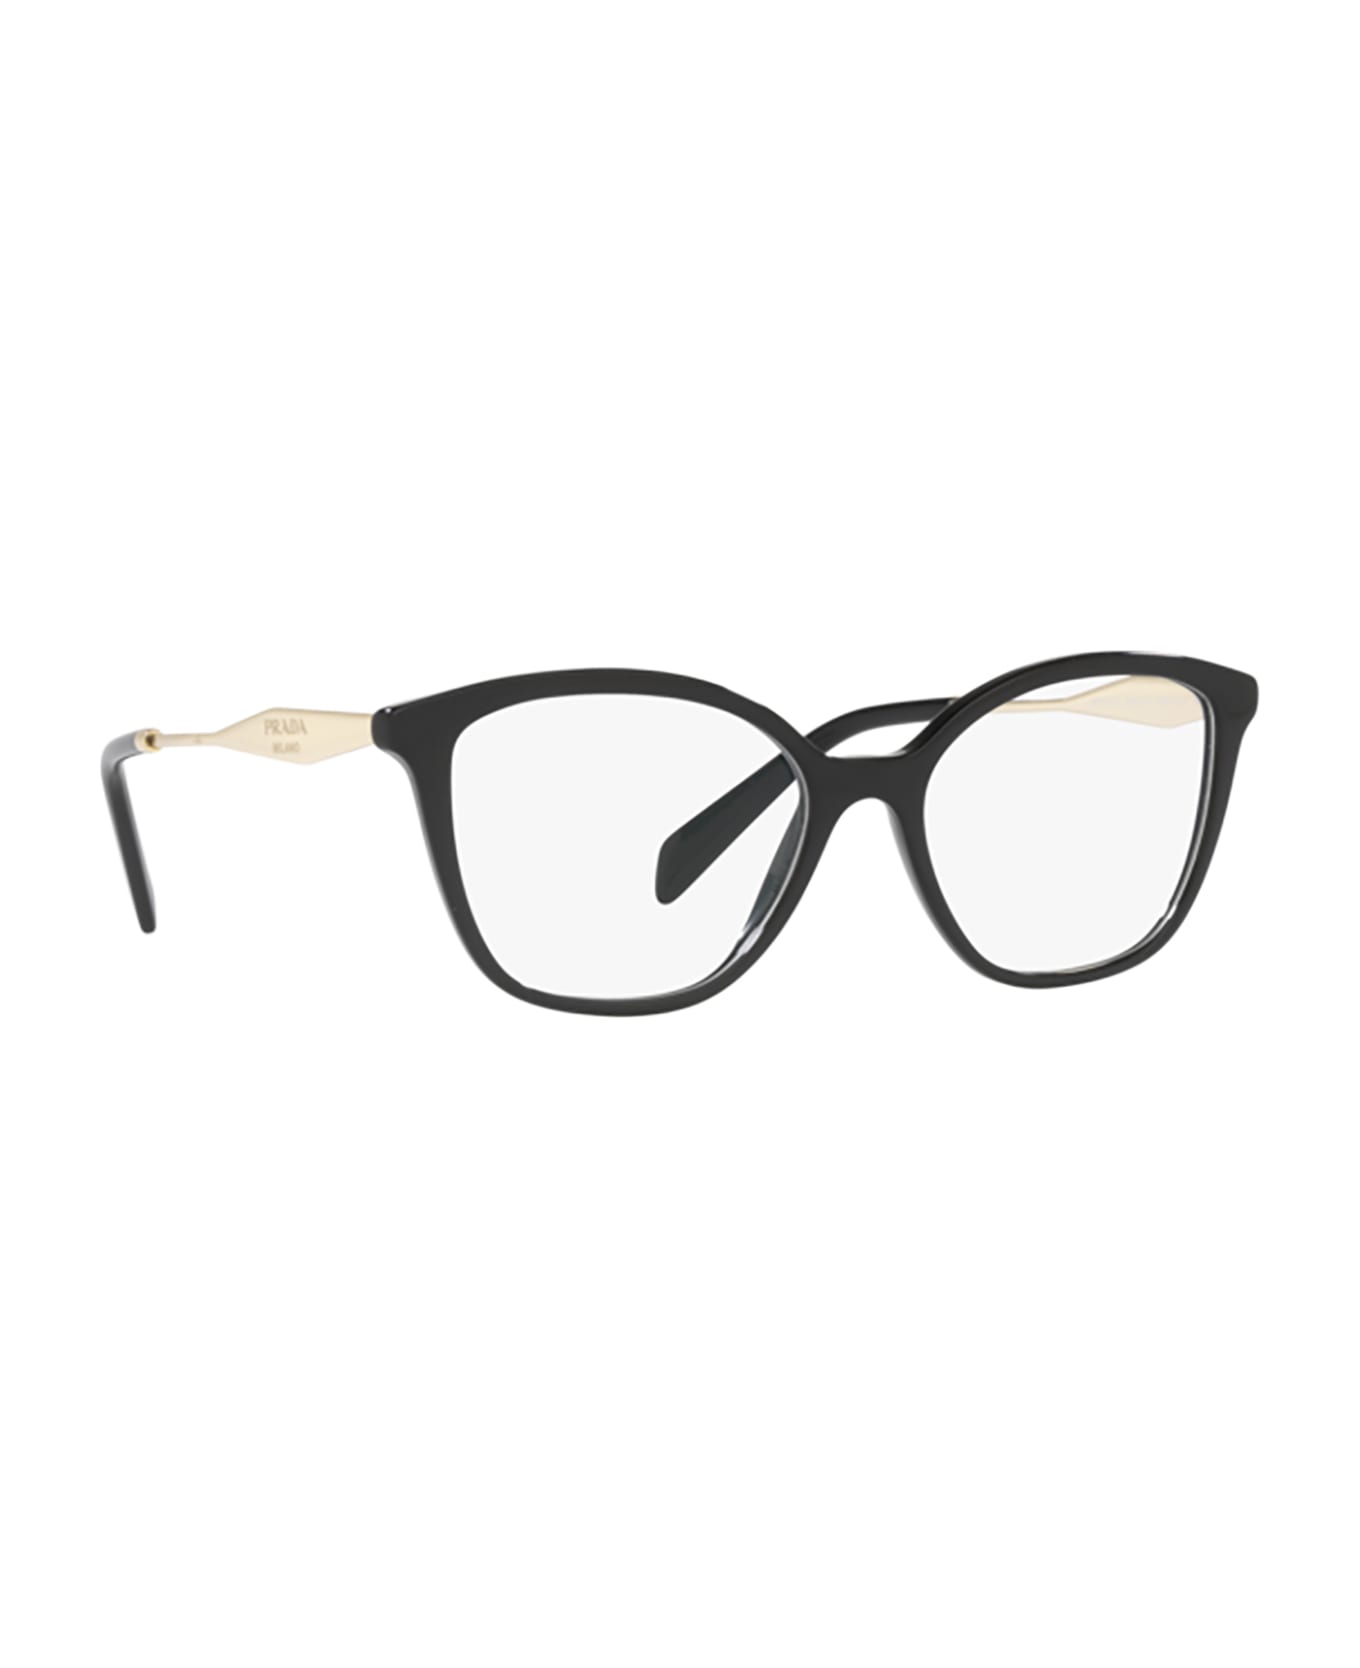 Prada Eyewear Pr 02zv Black Glasses - Black